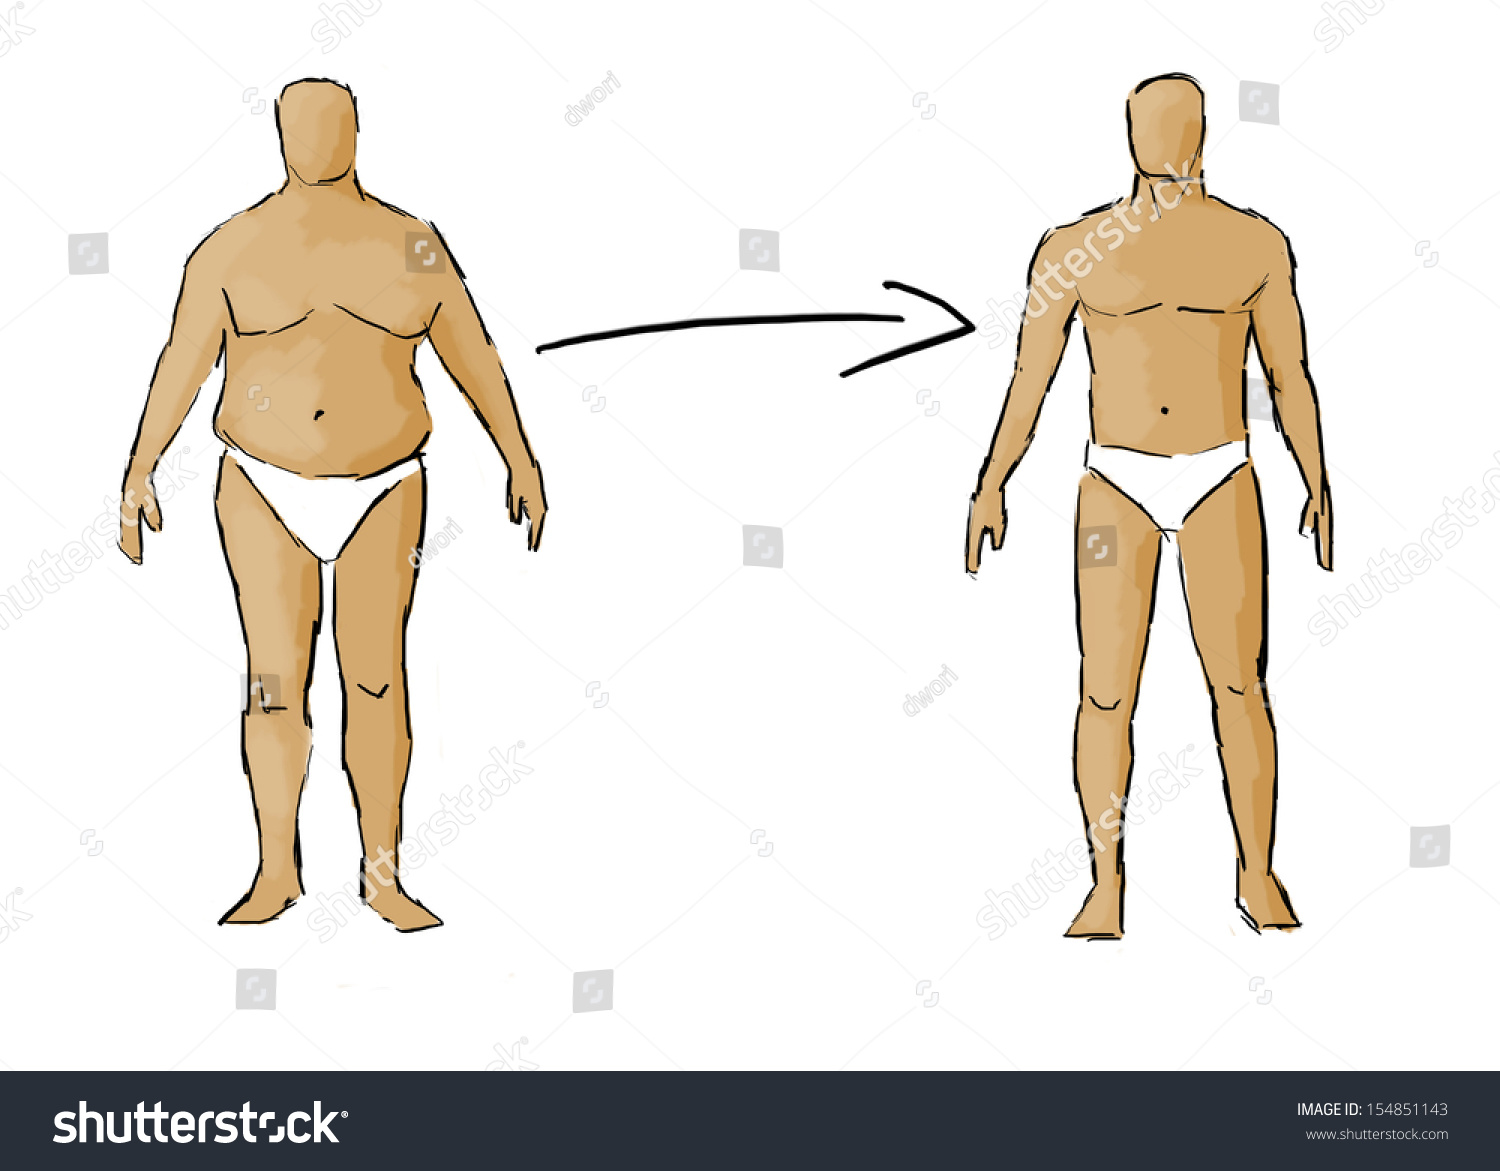 male weight gain progression